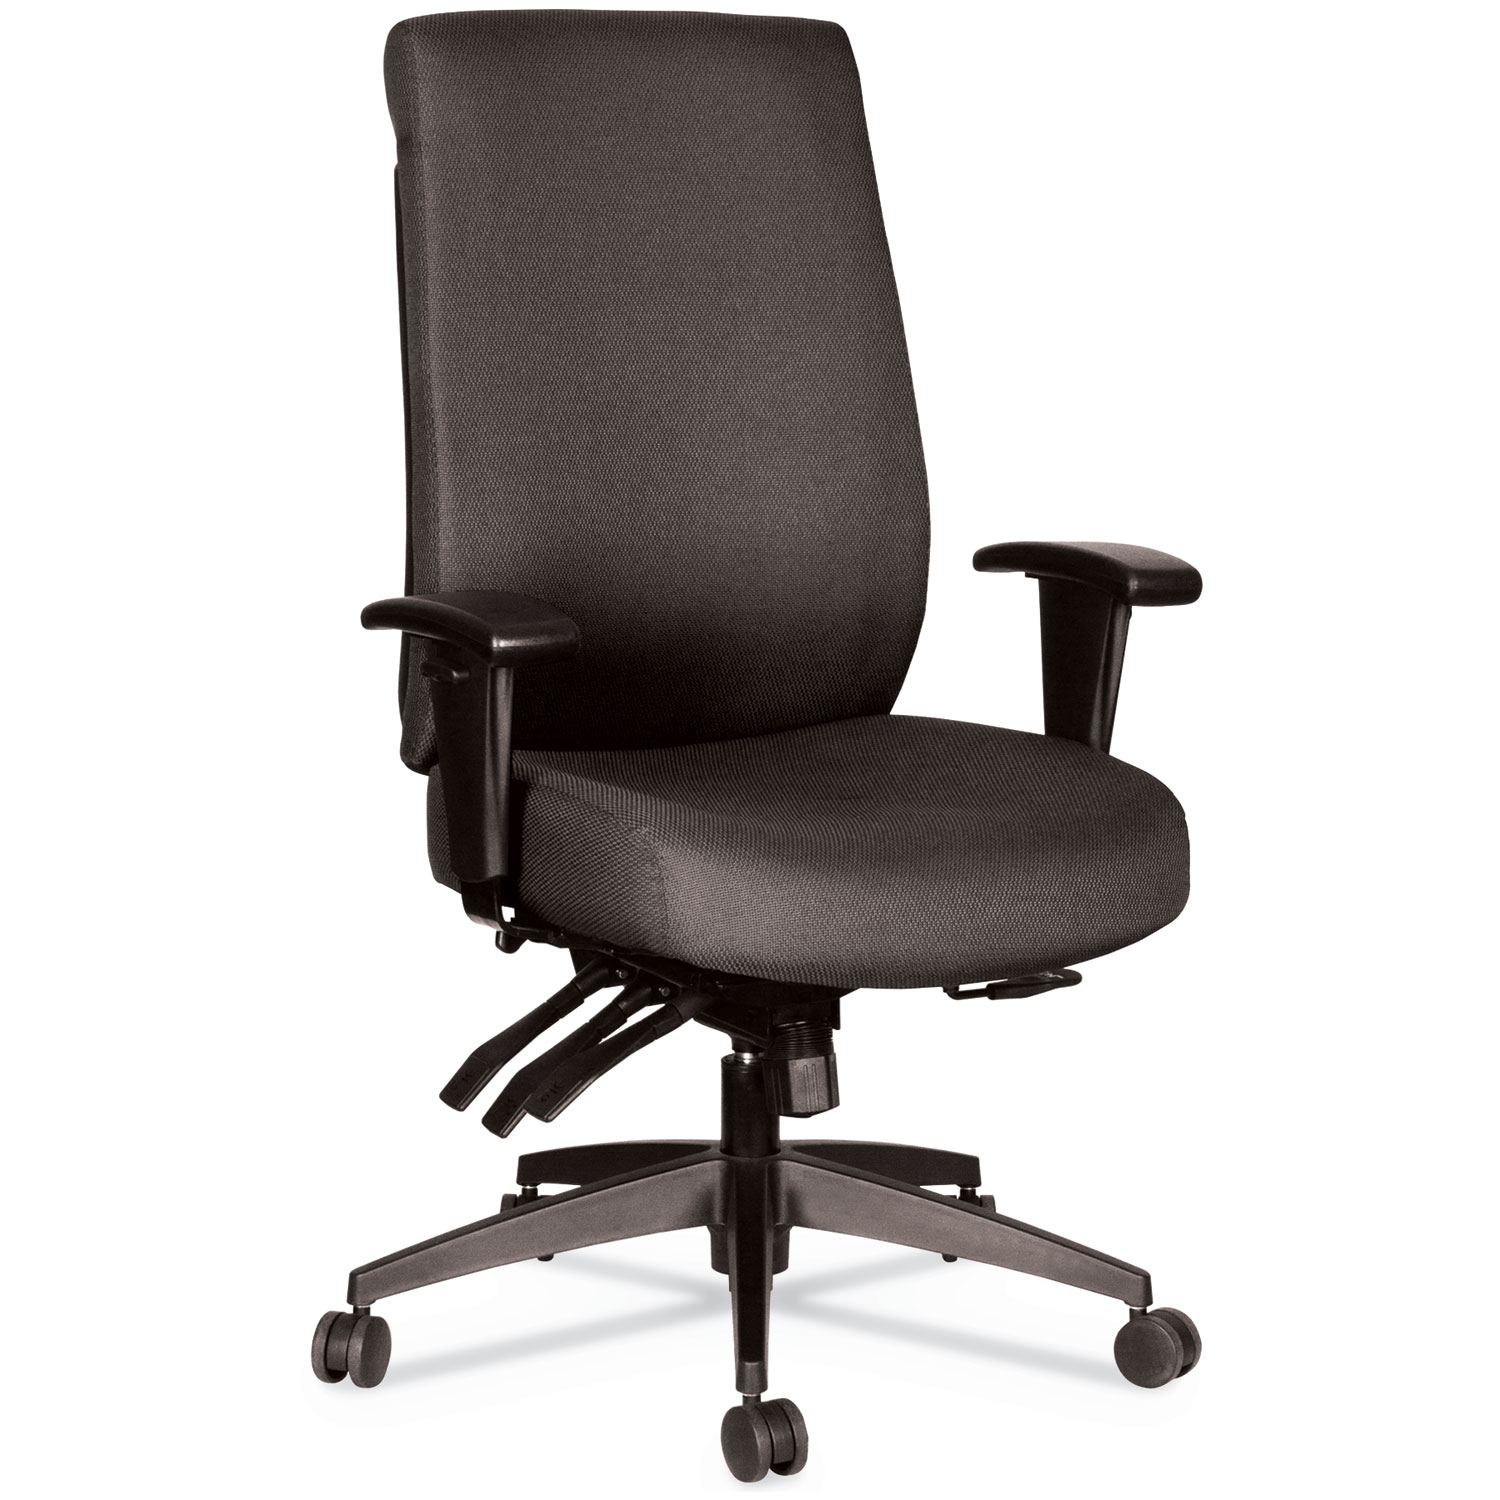  Alera ALEHPT4101 Alera Wrigley Series 24/7 High Performance High-Back Multifunction Task Chair, Up to 300 lbs., Black Seat/Back, Black Base (ALEHPT4101) 